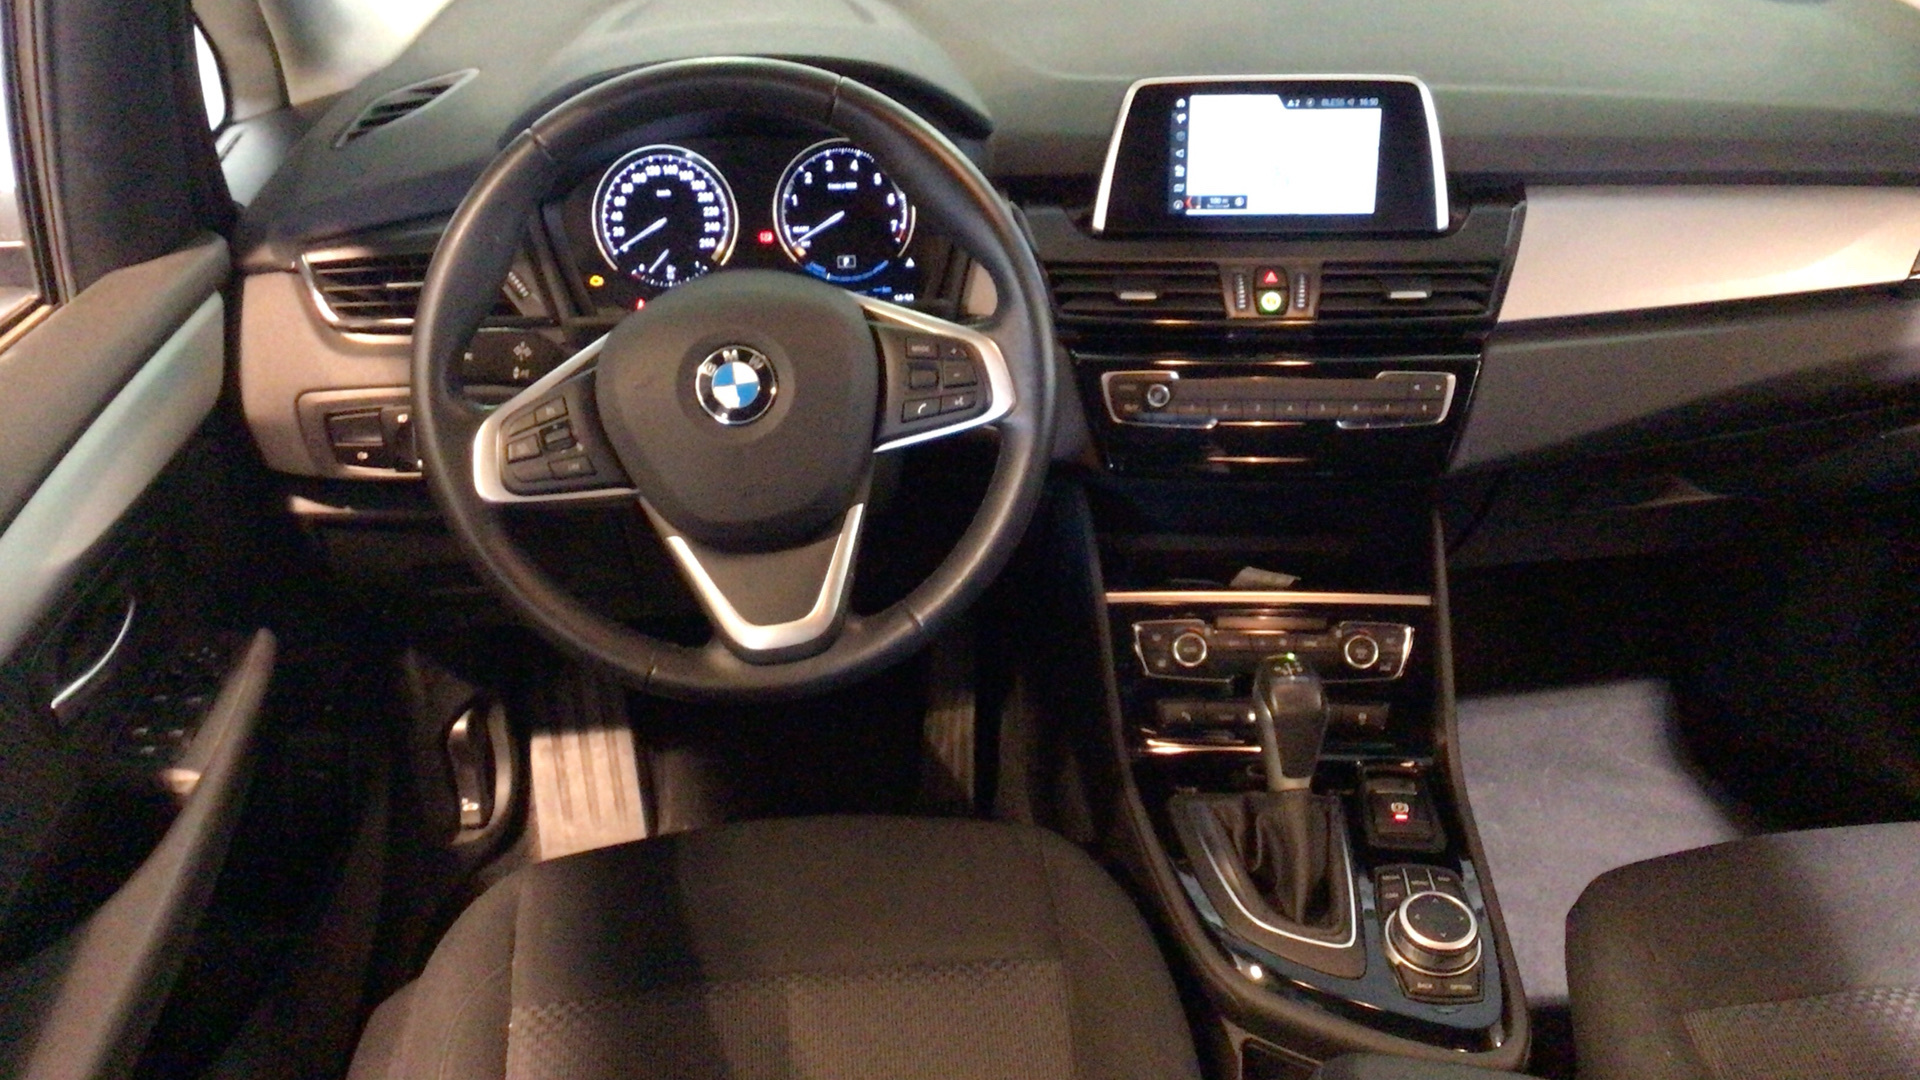 BMW Serie 2 225xe iPerformance Active Tourer color Gris Plata. Año 2020. 165KW(224CV). Híbrido Electro/Gasolina. En concesionario BYmyCAR Madrid - Alcalá de Madrid